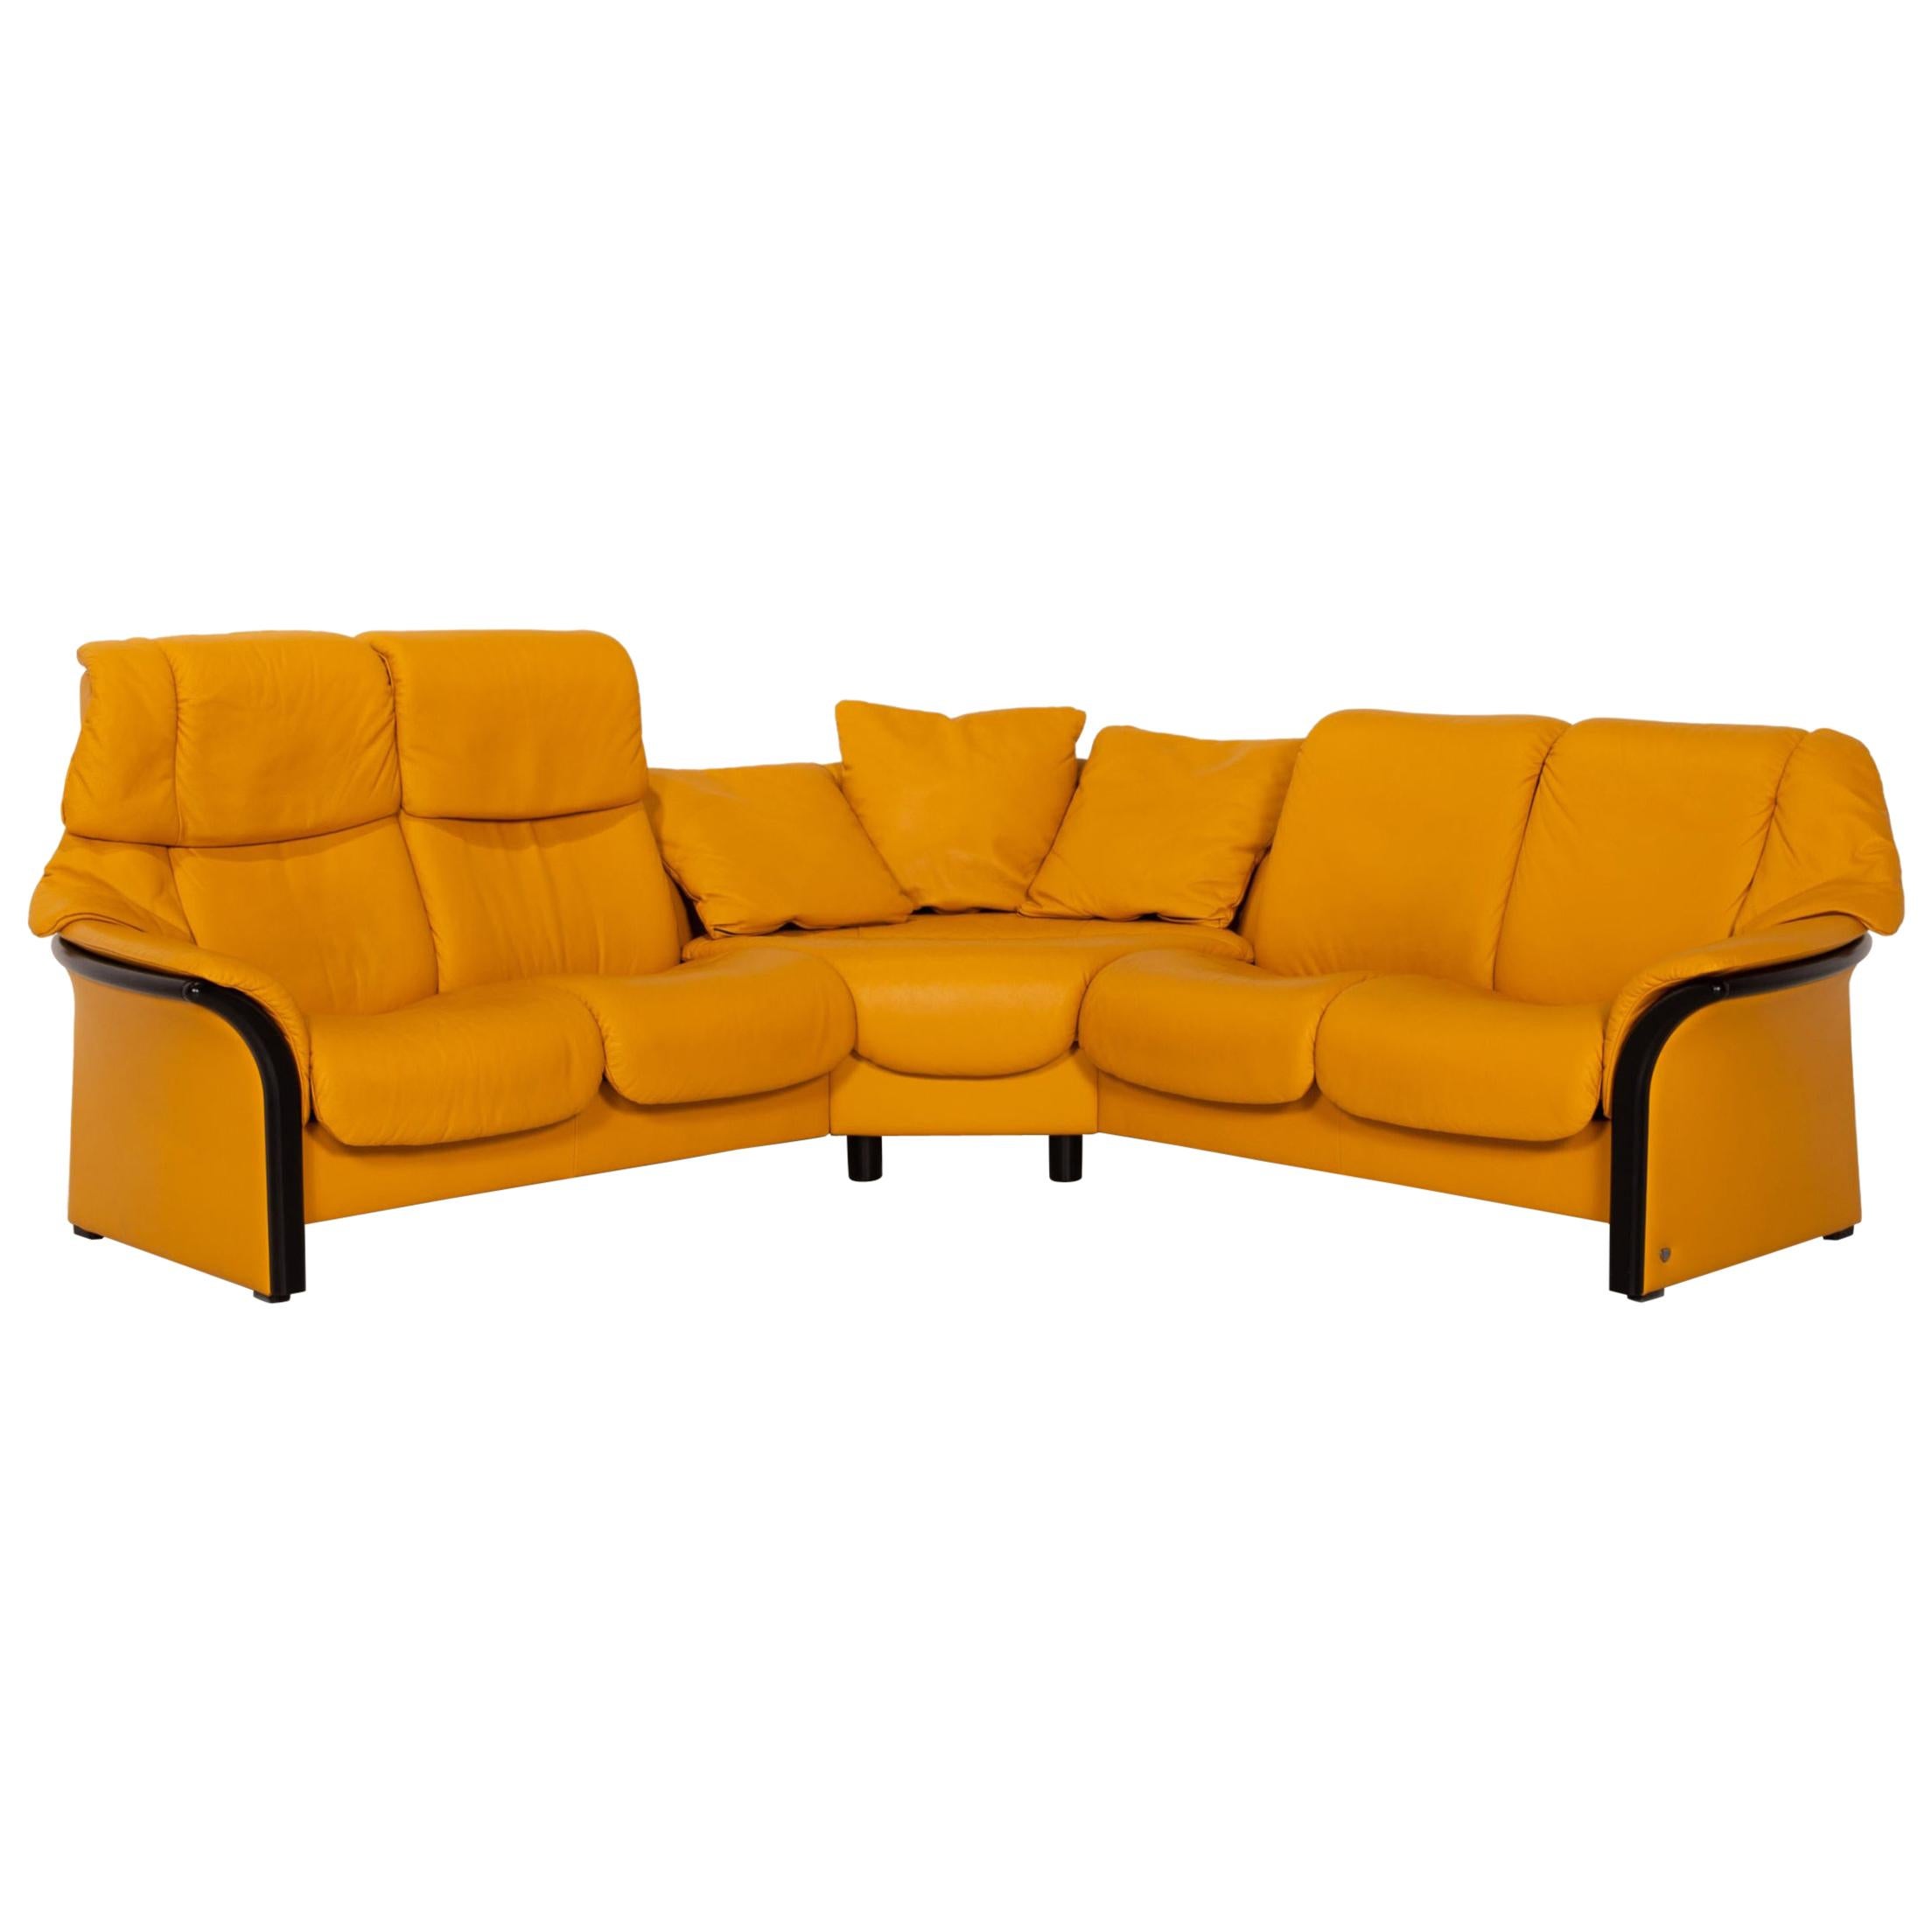 Stressless Eldorado Leather Corner Sofa Yellow Relax Function Sofa Couch